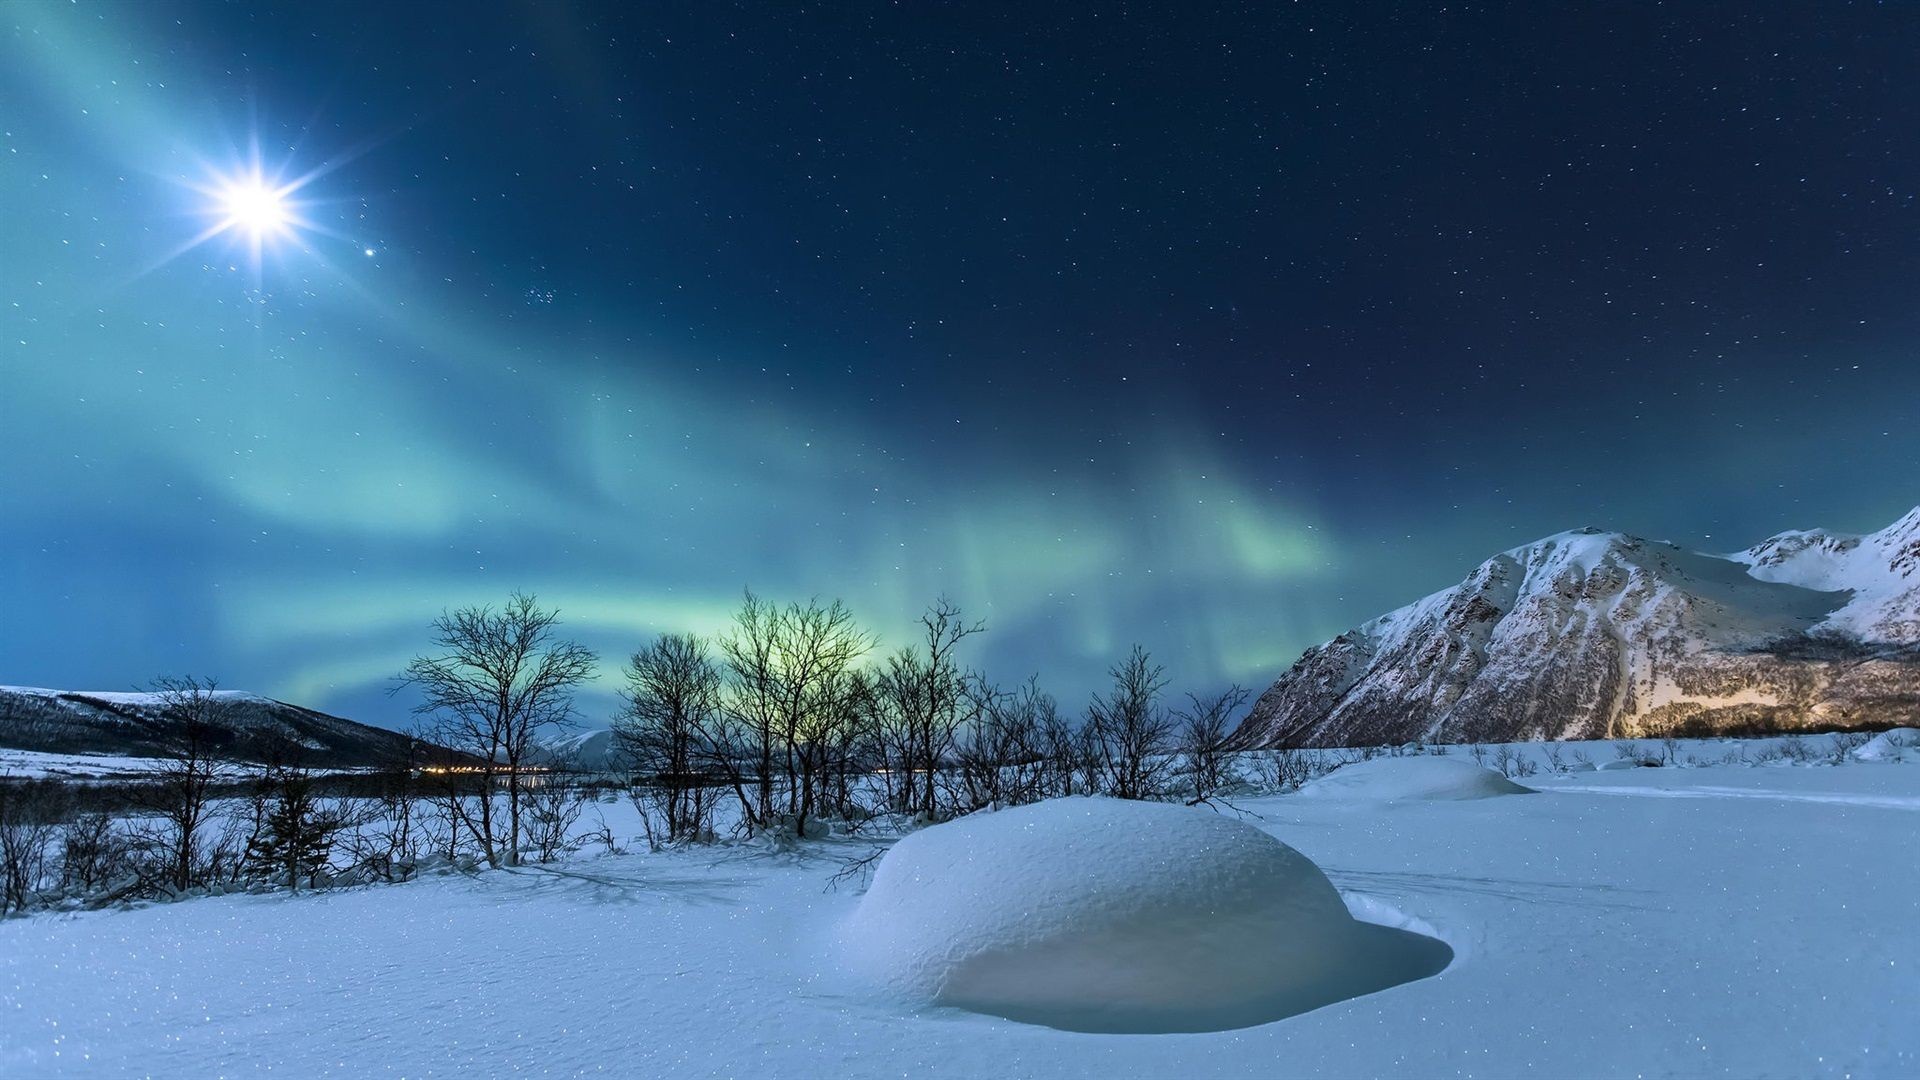 439908-nature-landscape-Norway-mountains-night-winter-snow-Moon-moonlight-trees-stars-hills-long_exposure-aurorae.jpg